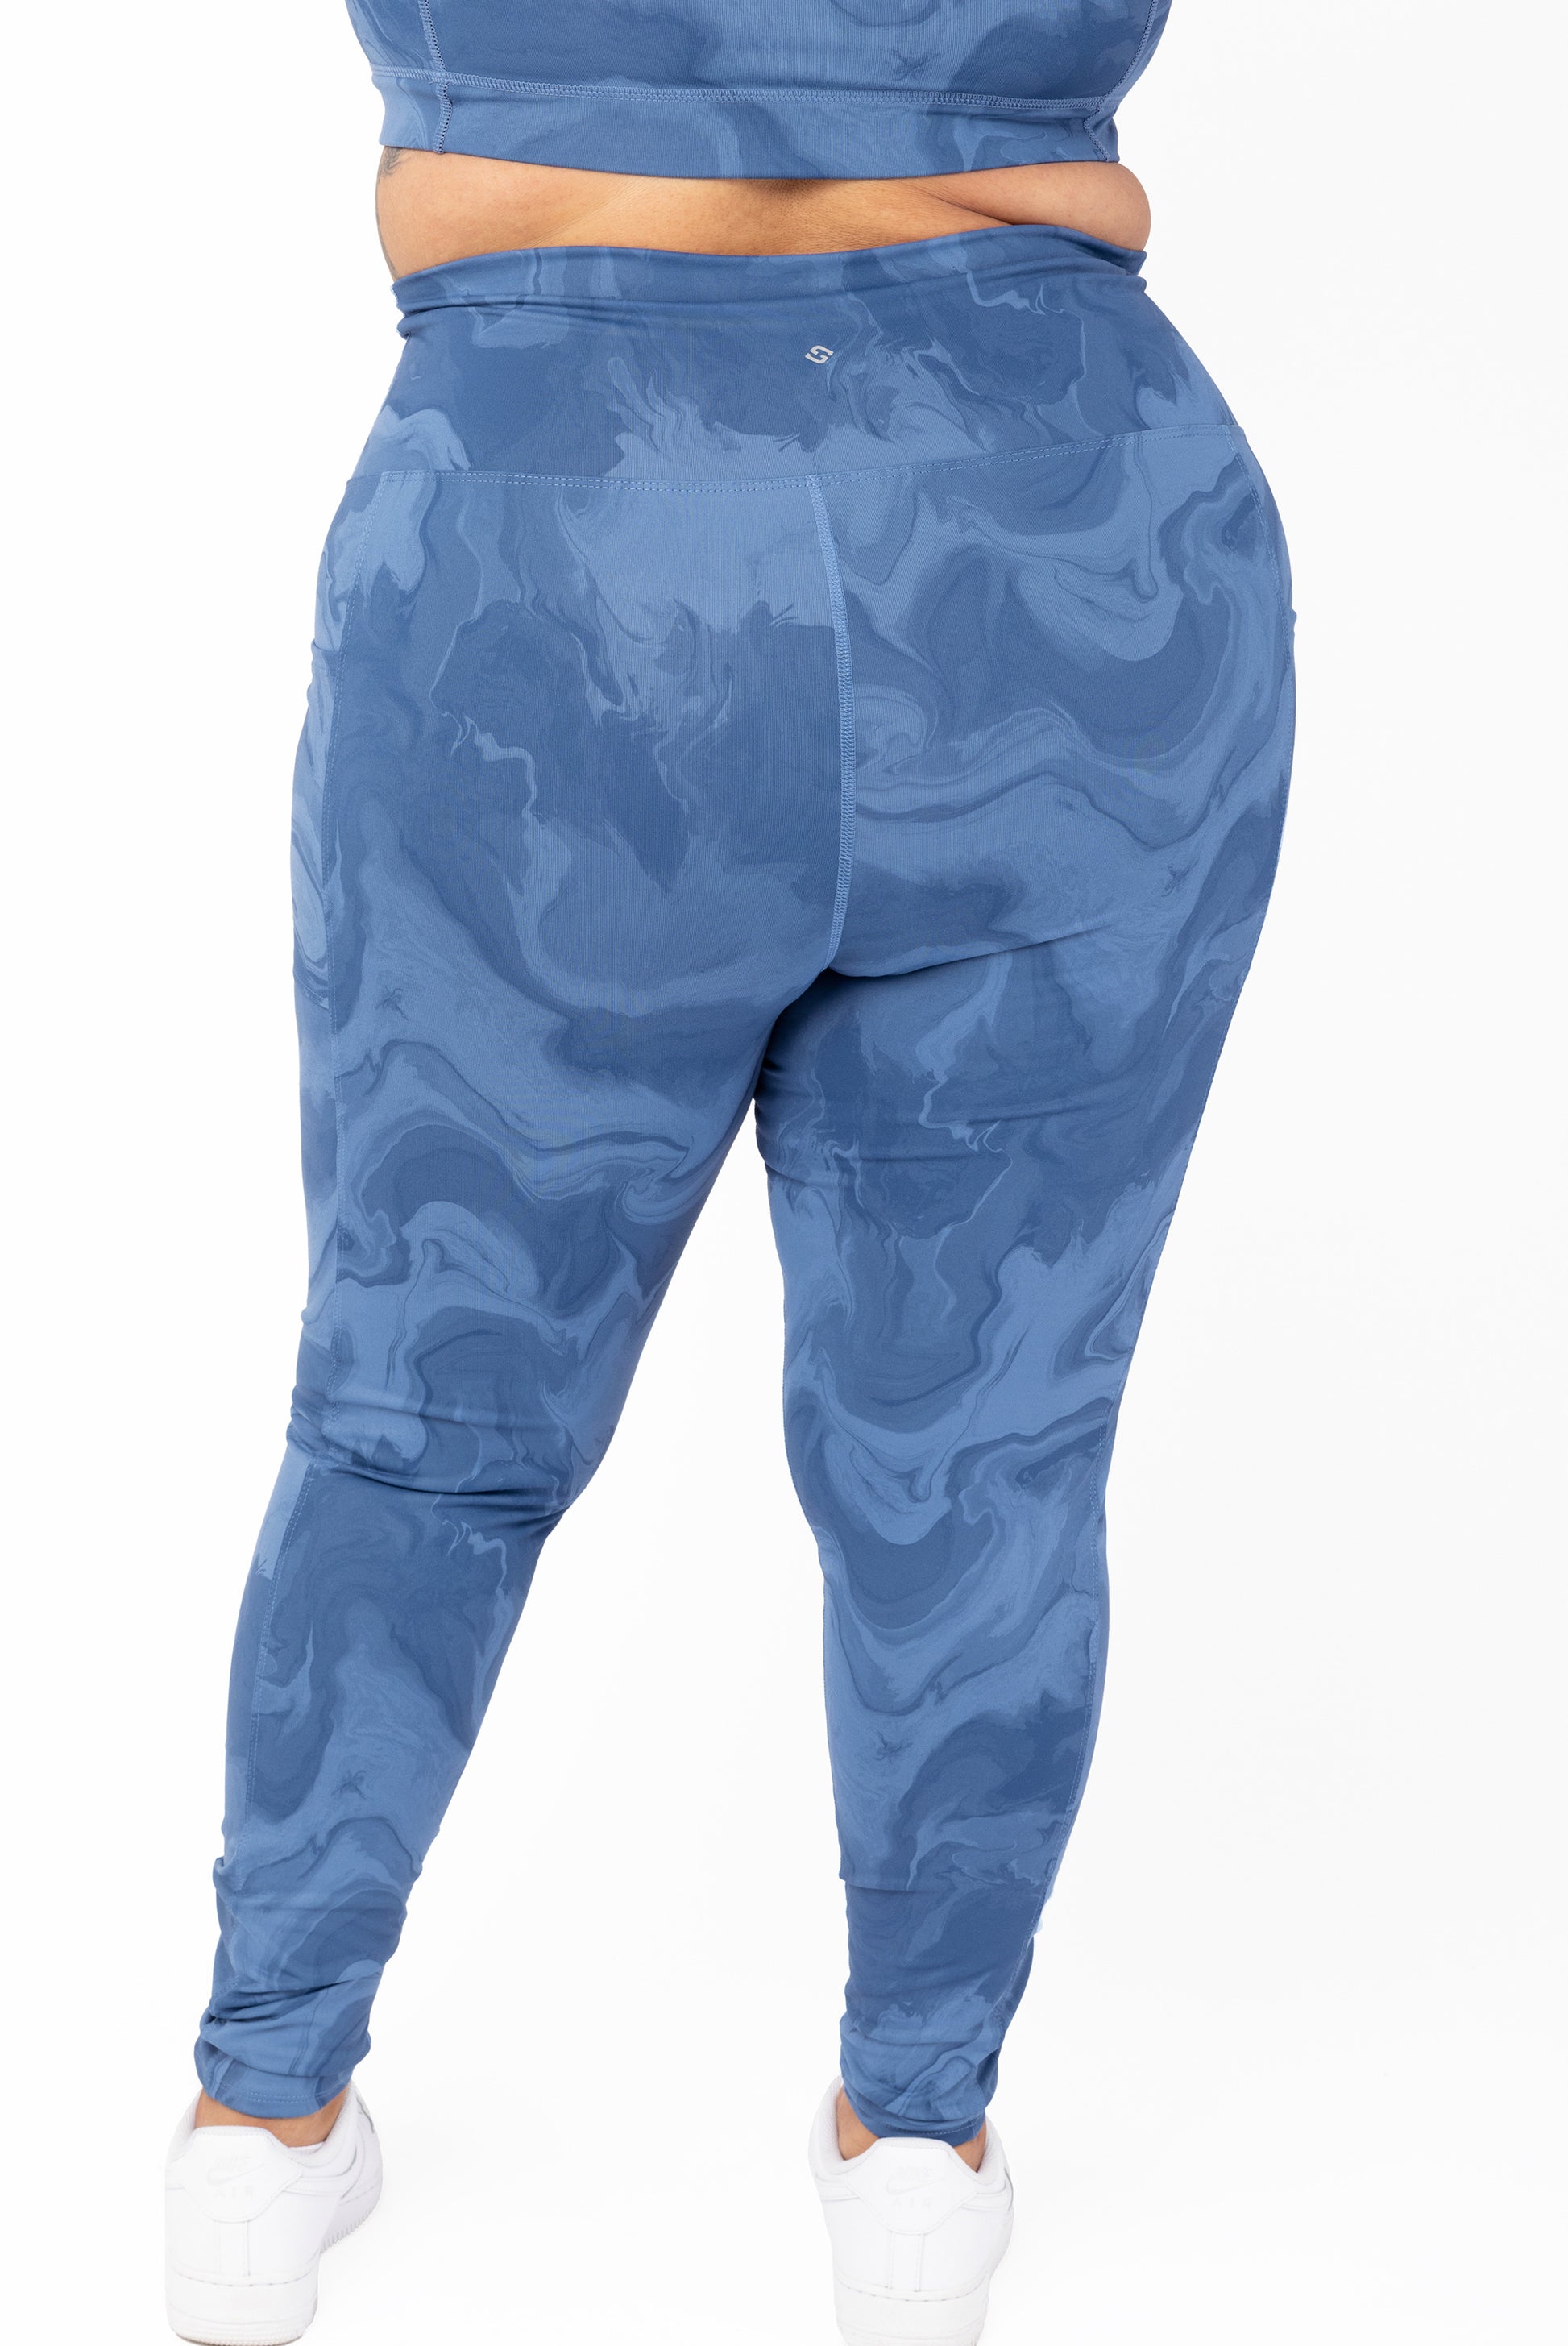 back view of SuperHold pocket leggings in moonlight marble print